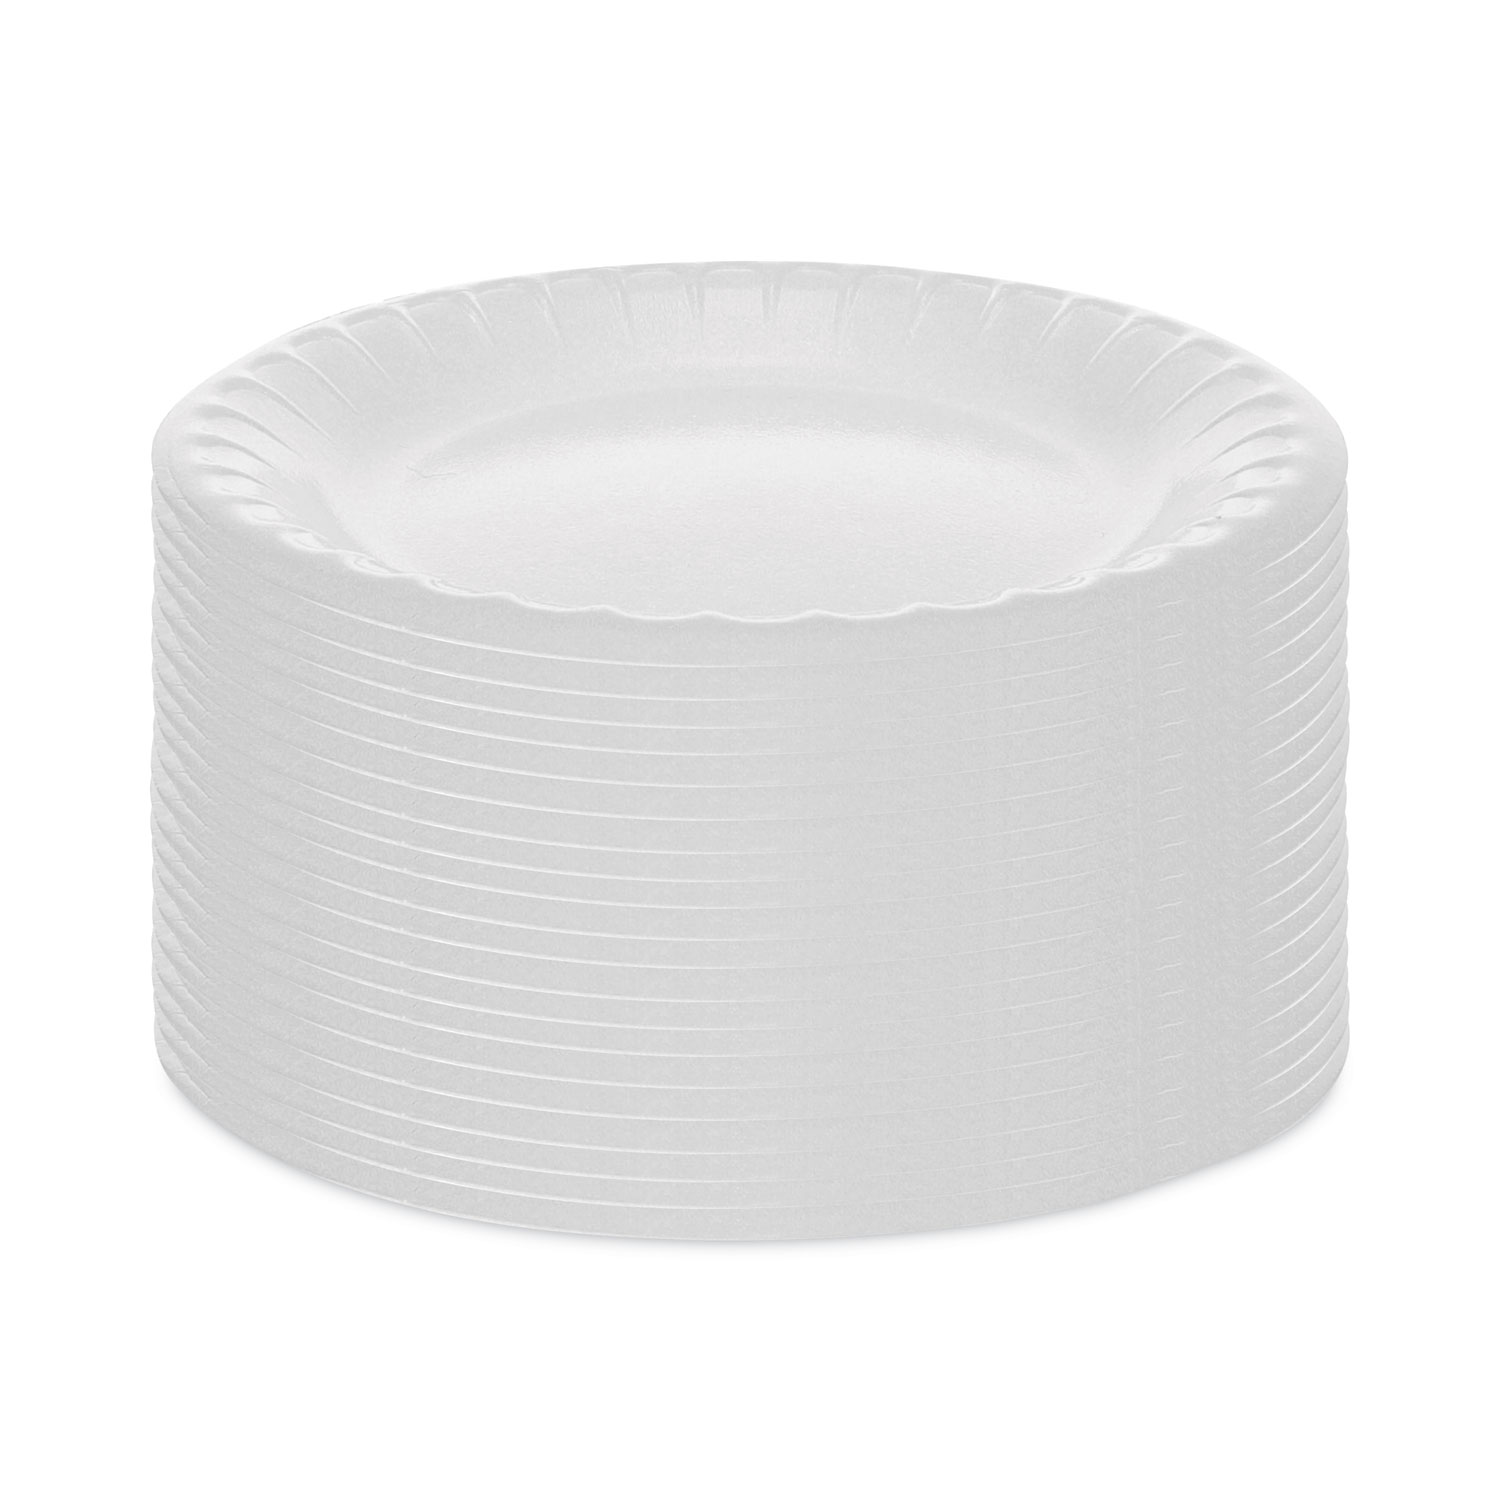 Placesetter Deluxe White Laminated Foam Plate - 8.88 diameter